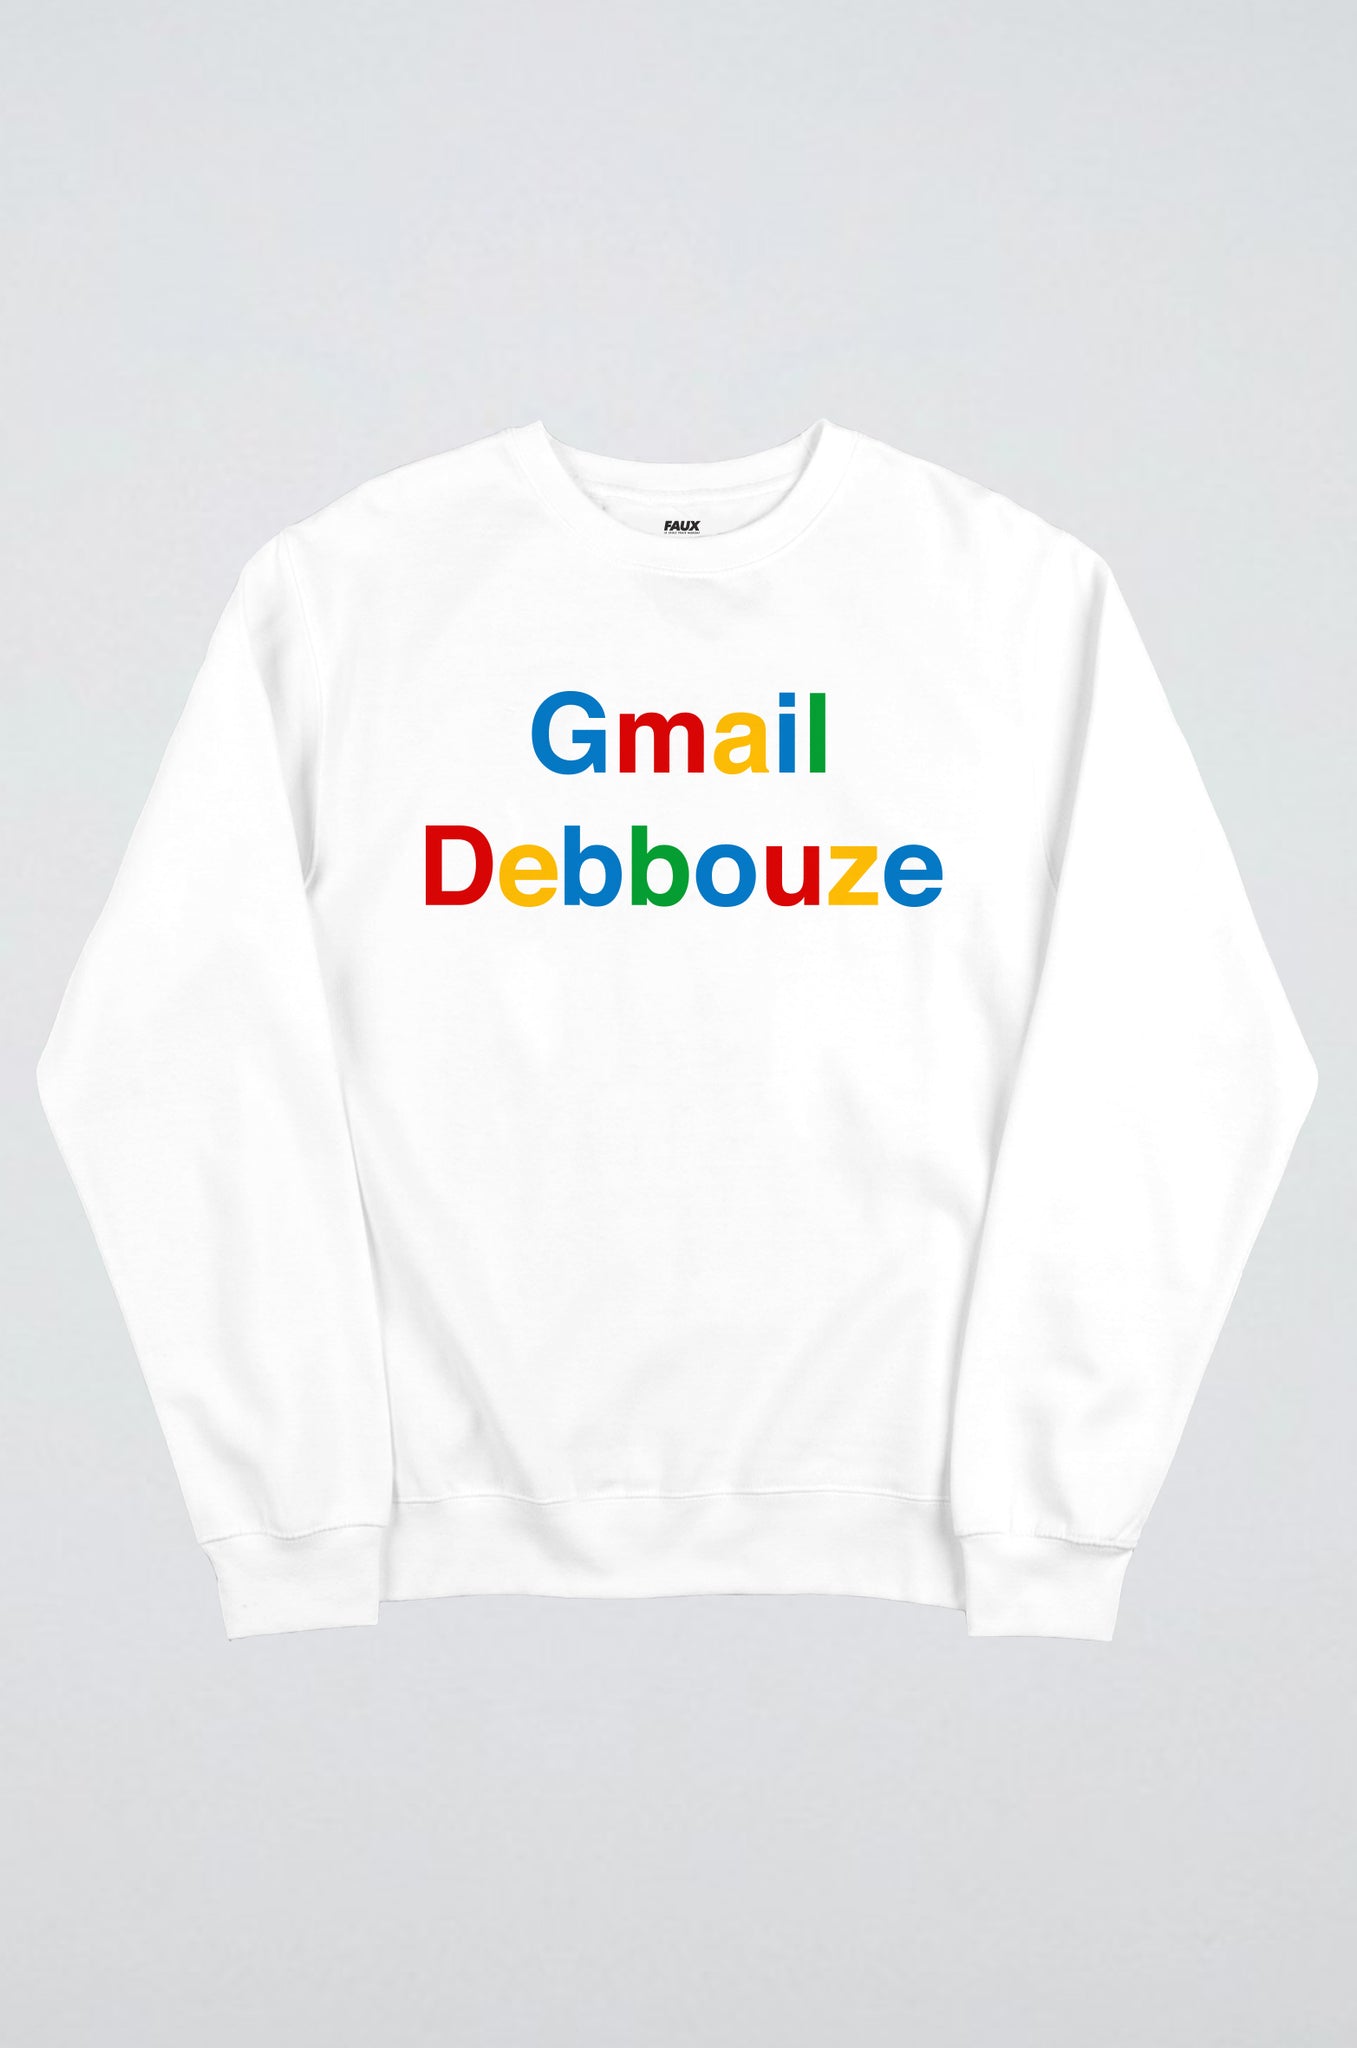 Gmail Debbouze